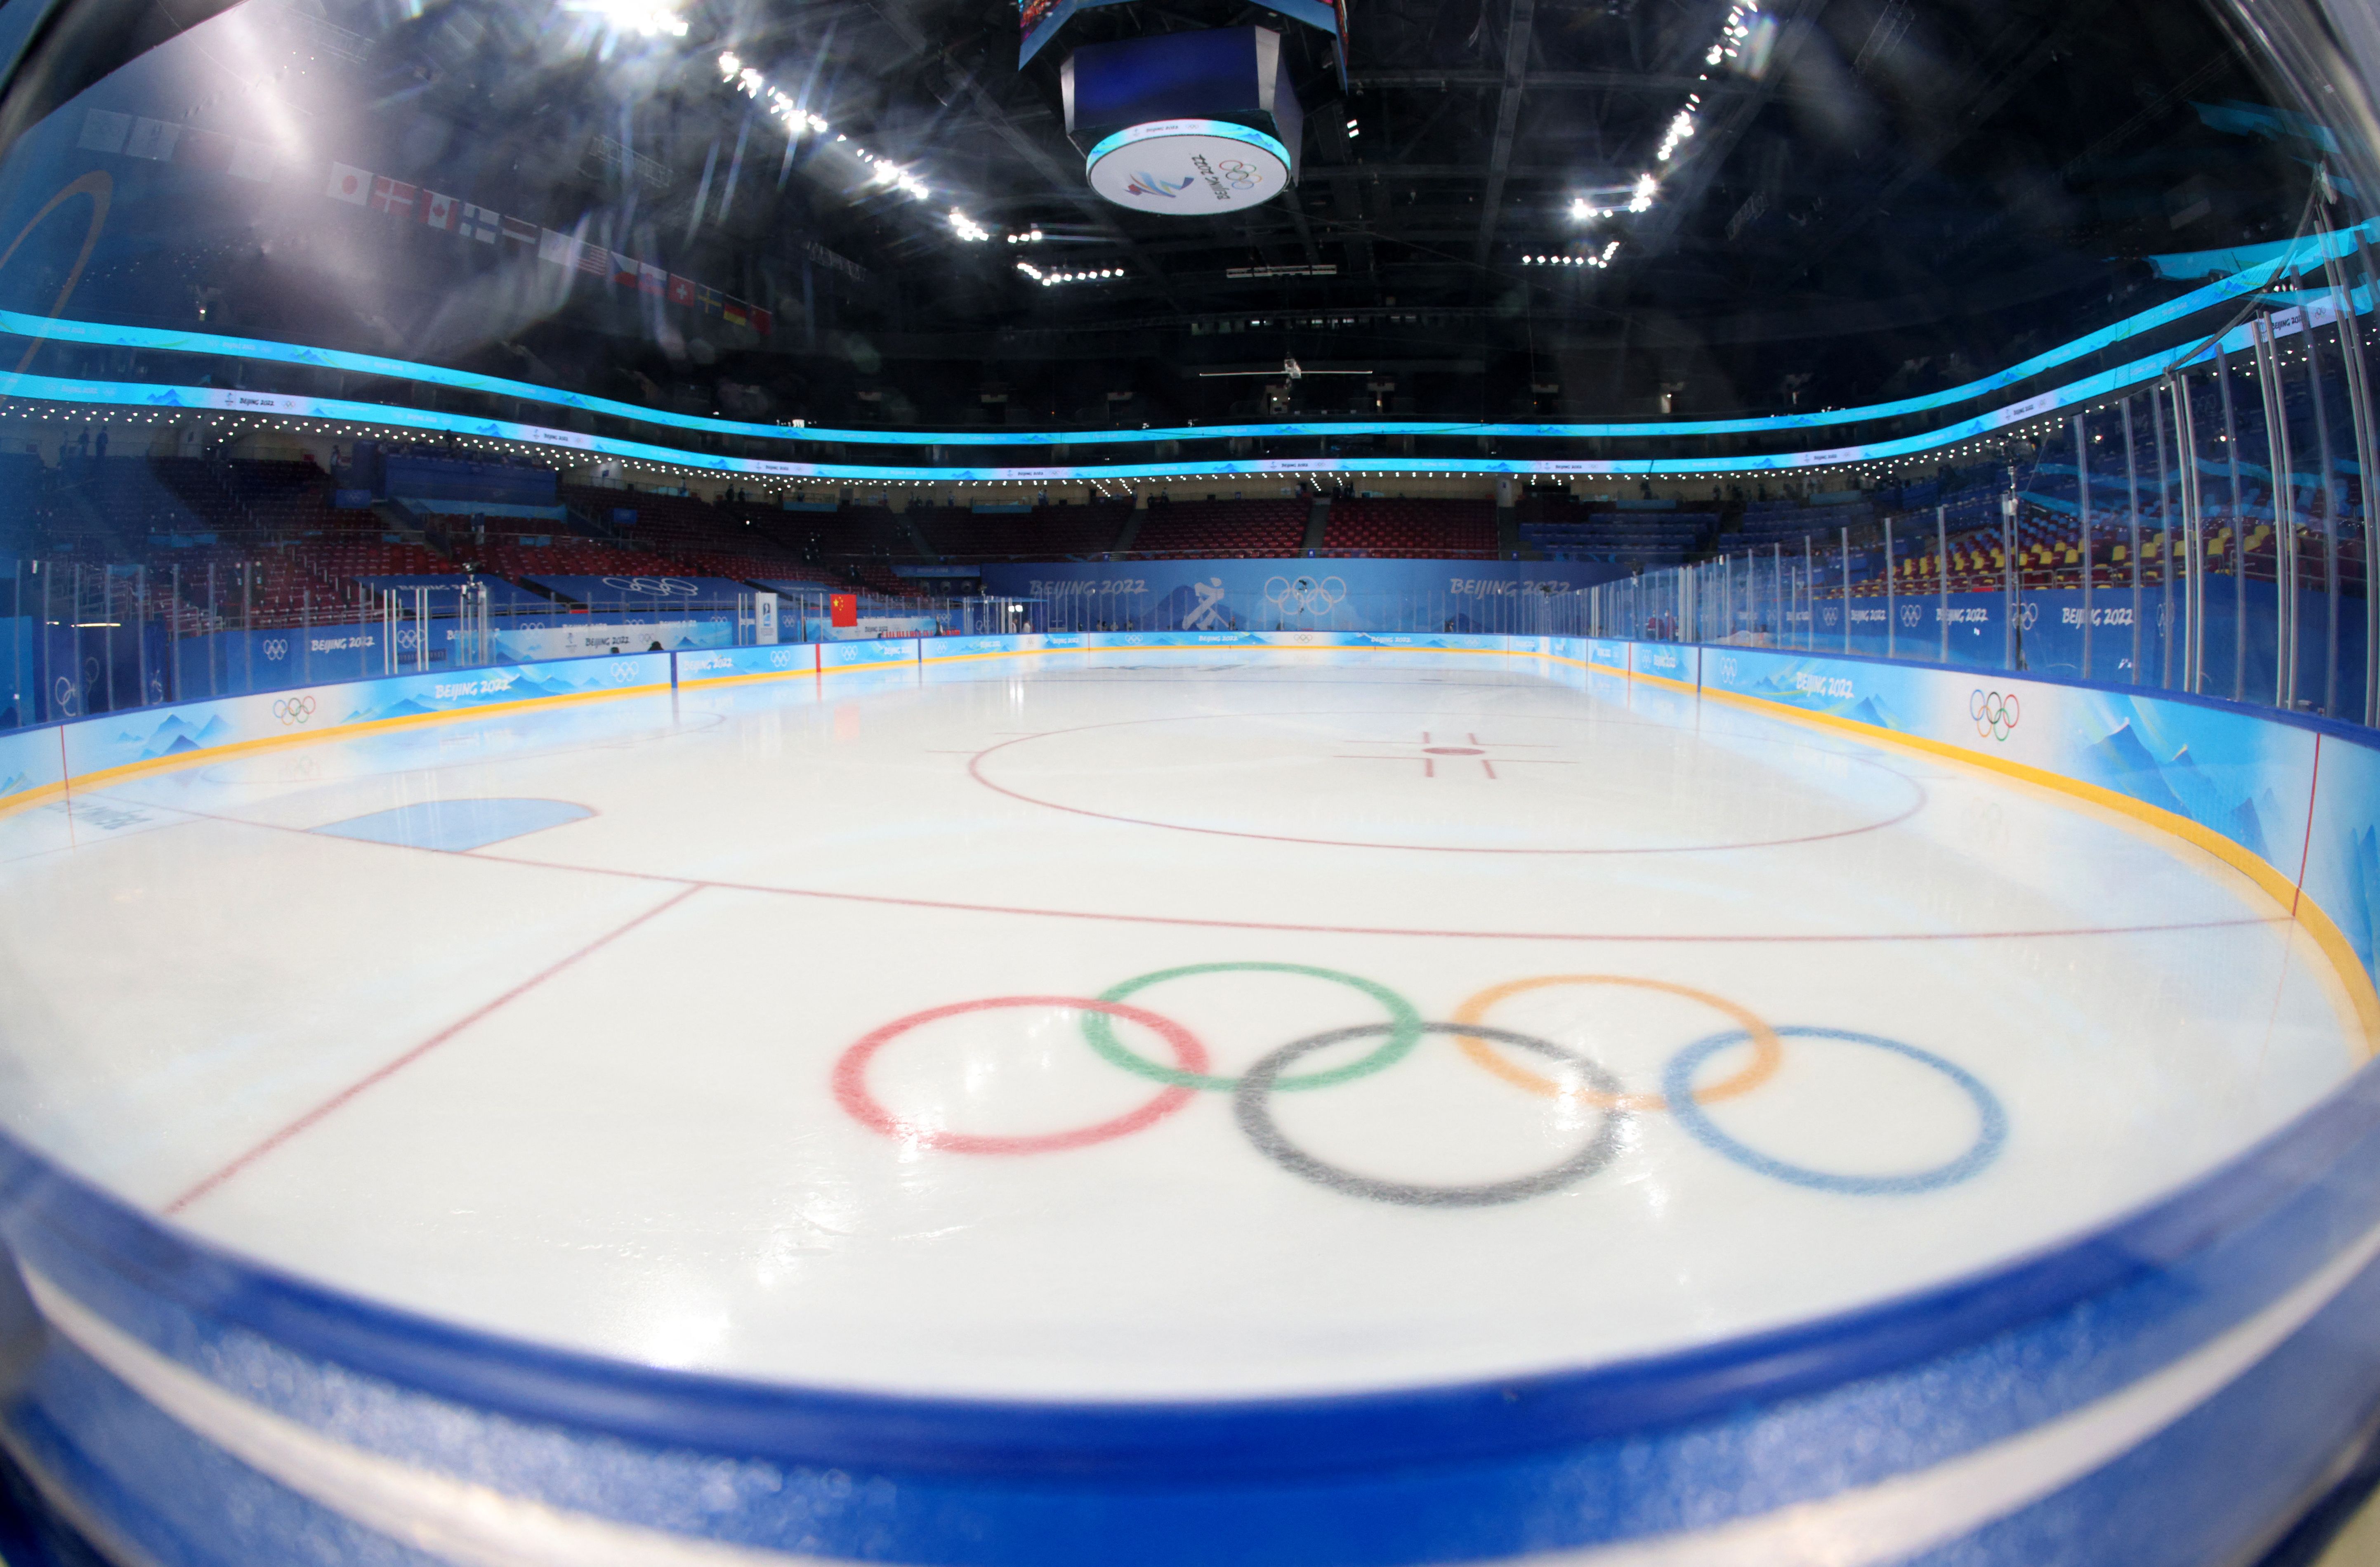 Canada cruises past China in Olympic men's hockey, will meet again